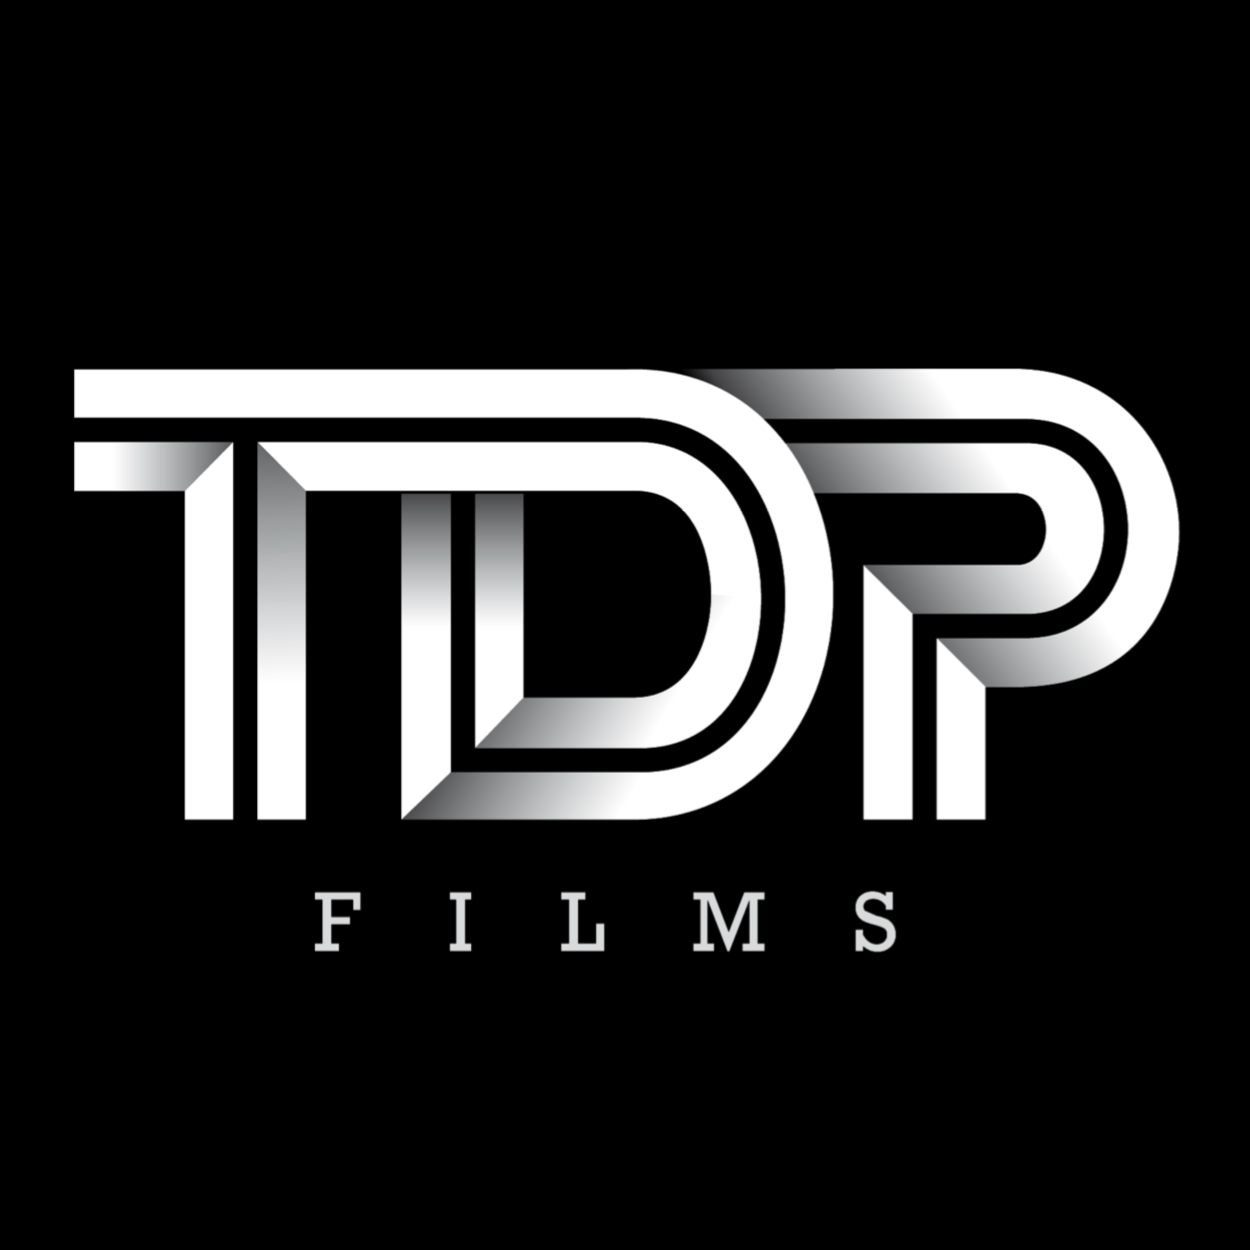 TDP FILMS